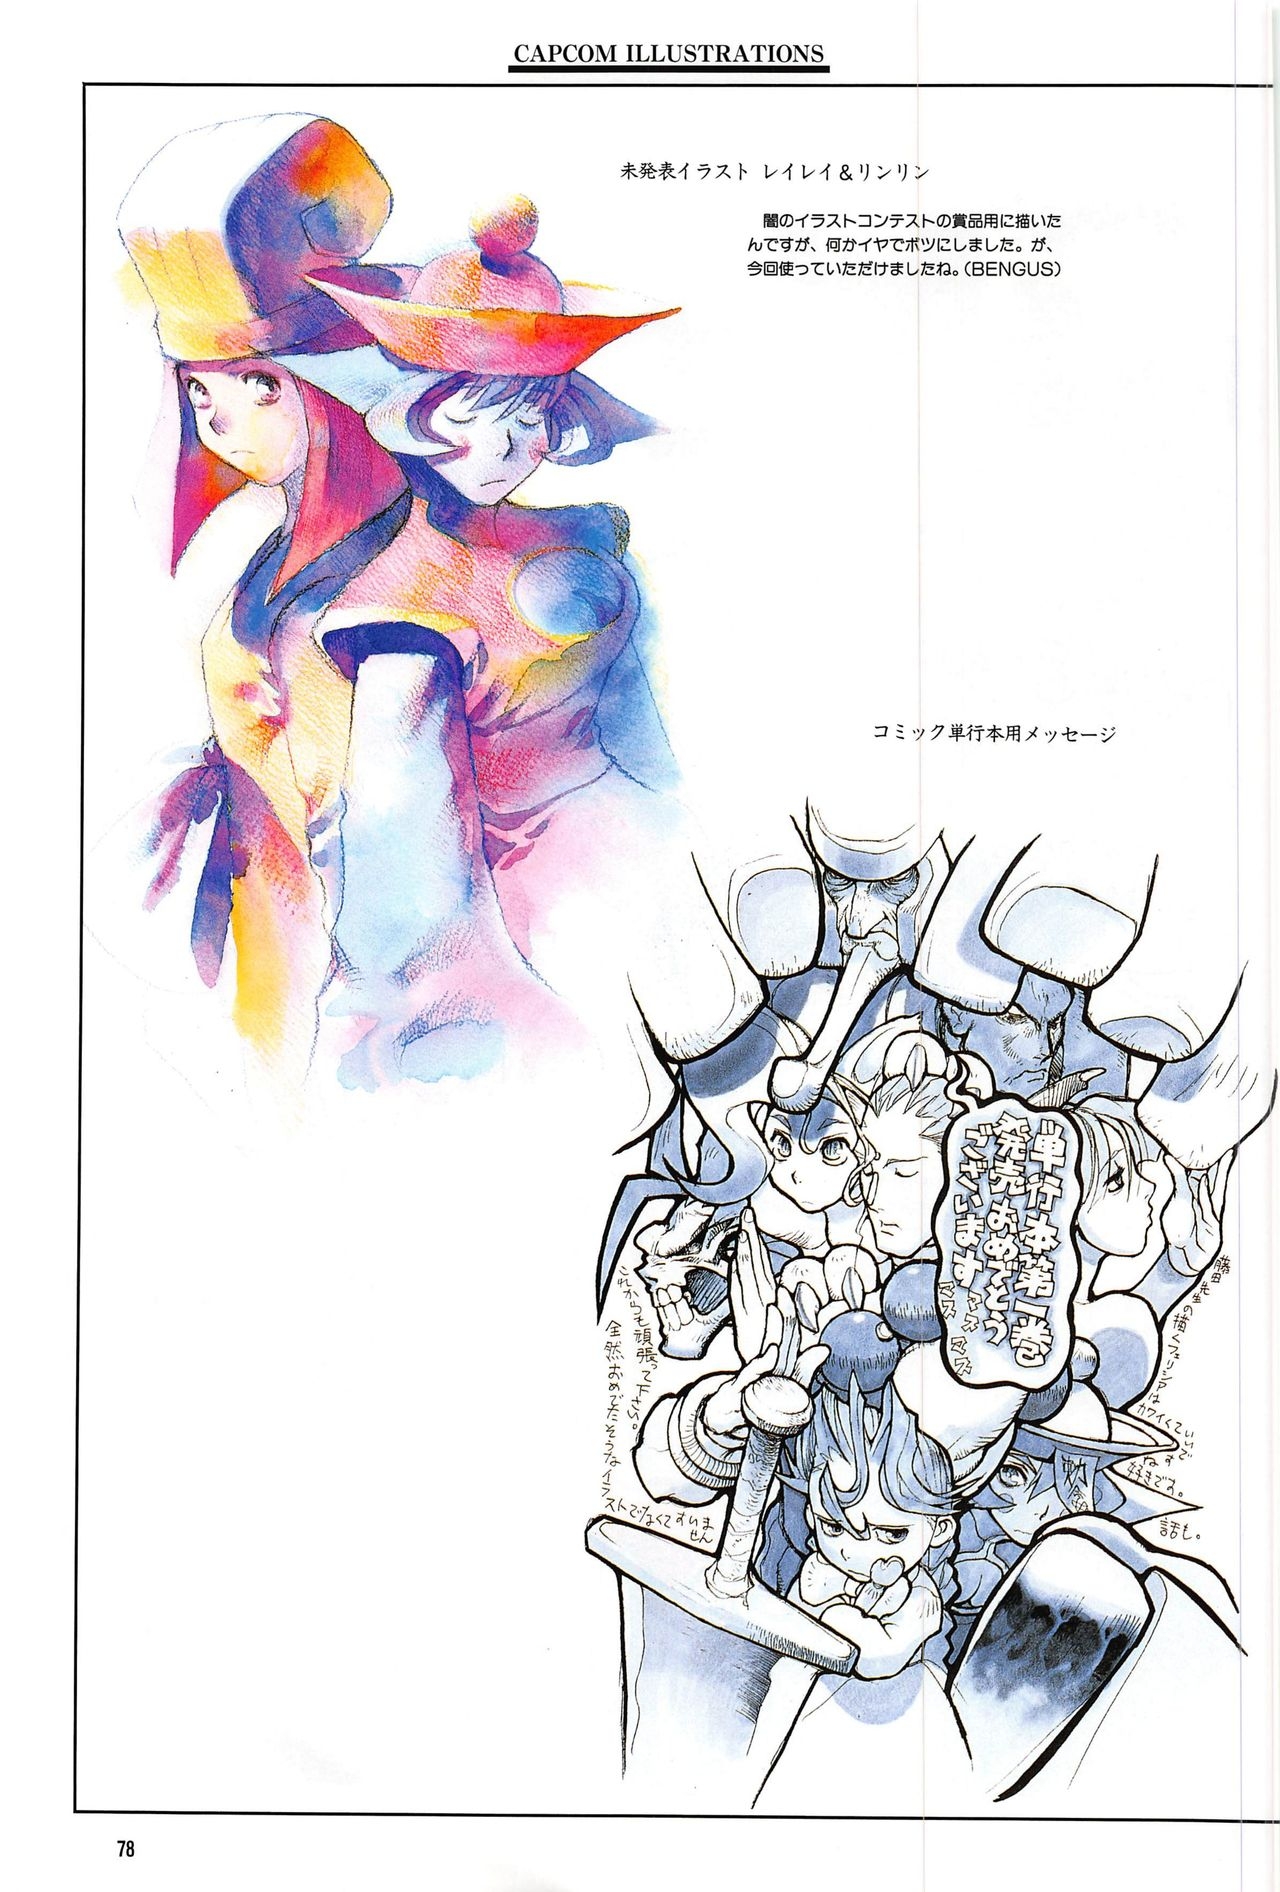 Capcom Illustrations - Gamest Mook 17  [High Quality] 81